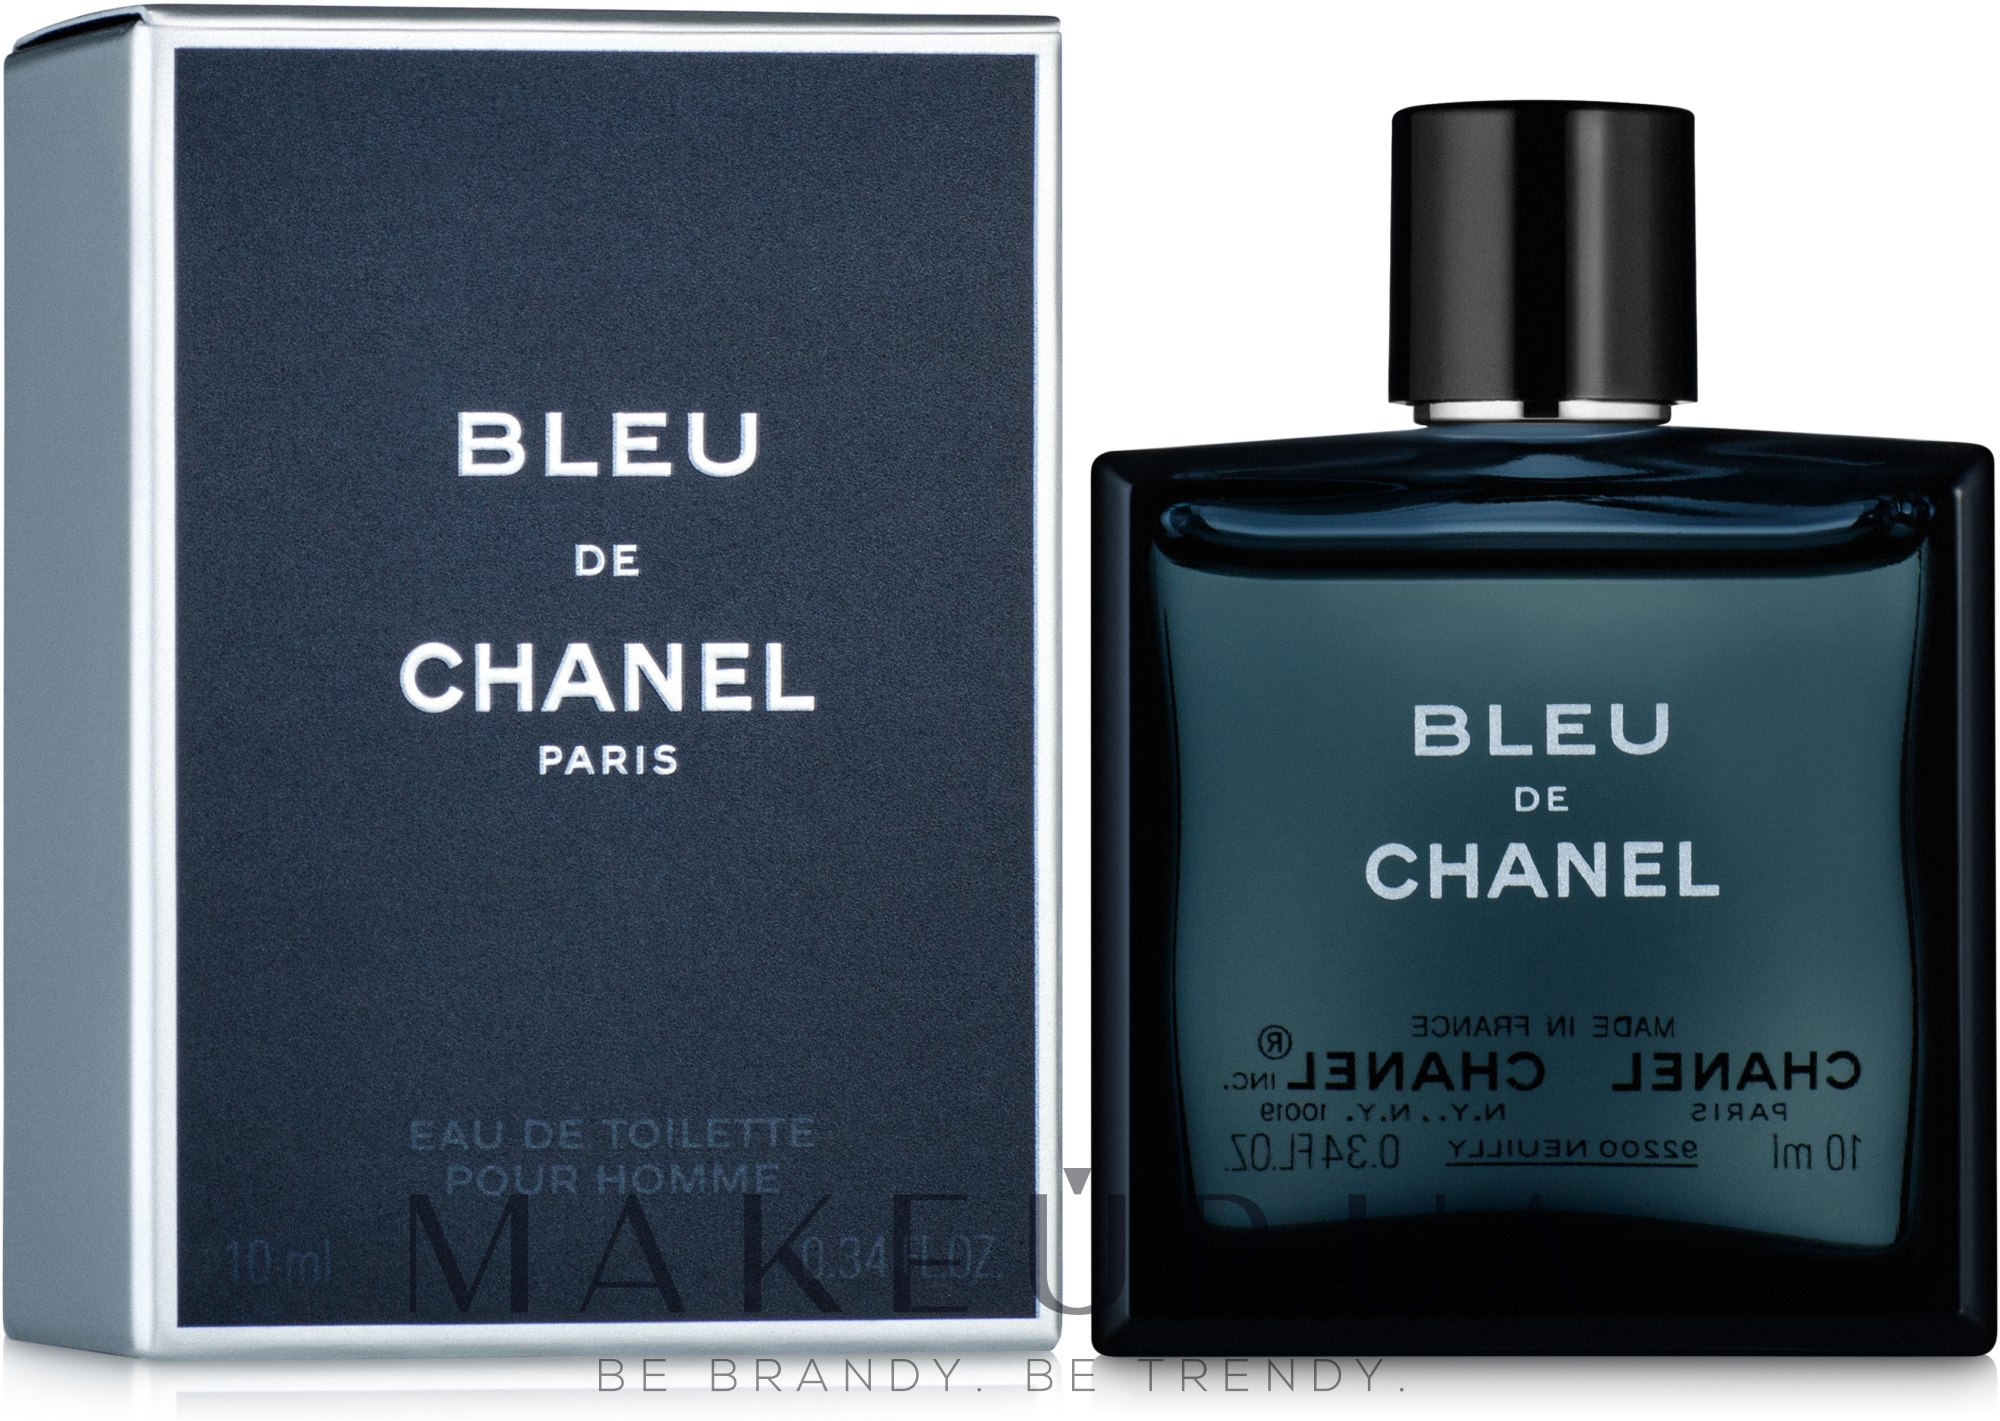 Chanel bleu de Chanel EDT man 10ml Mini. Bleu de Chanel миниатюра 10 мл. Bleu de Chanel цветная коробка. Bleu de Chanel реклама.